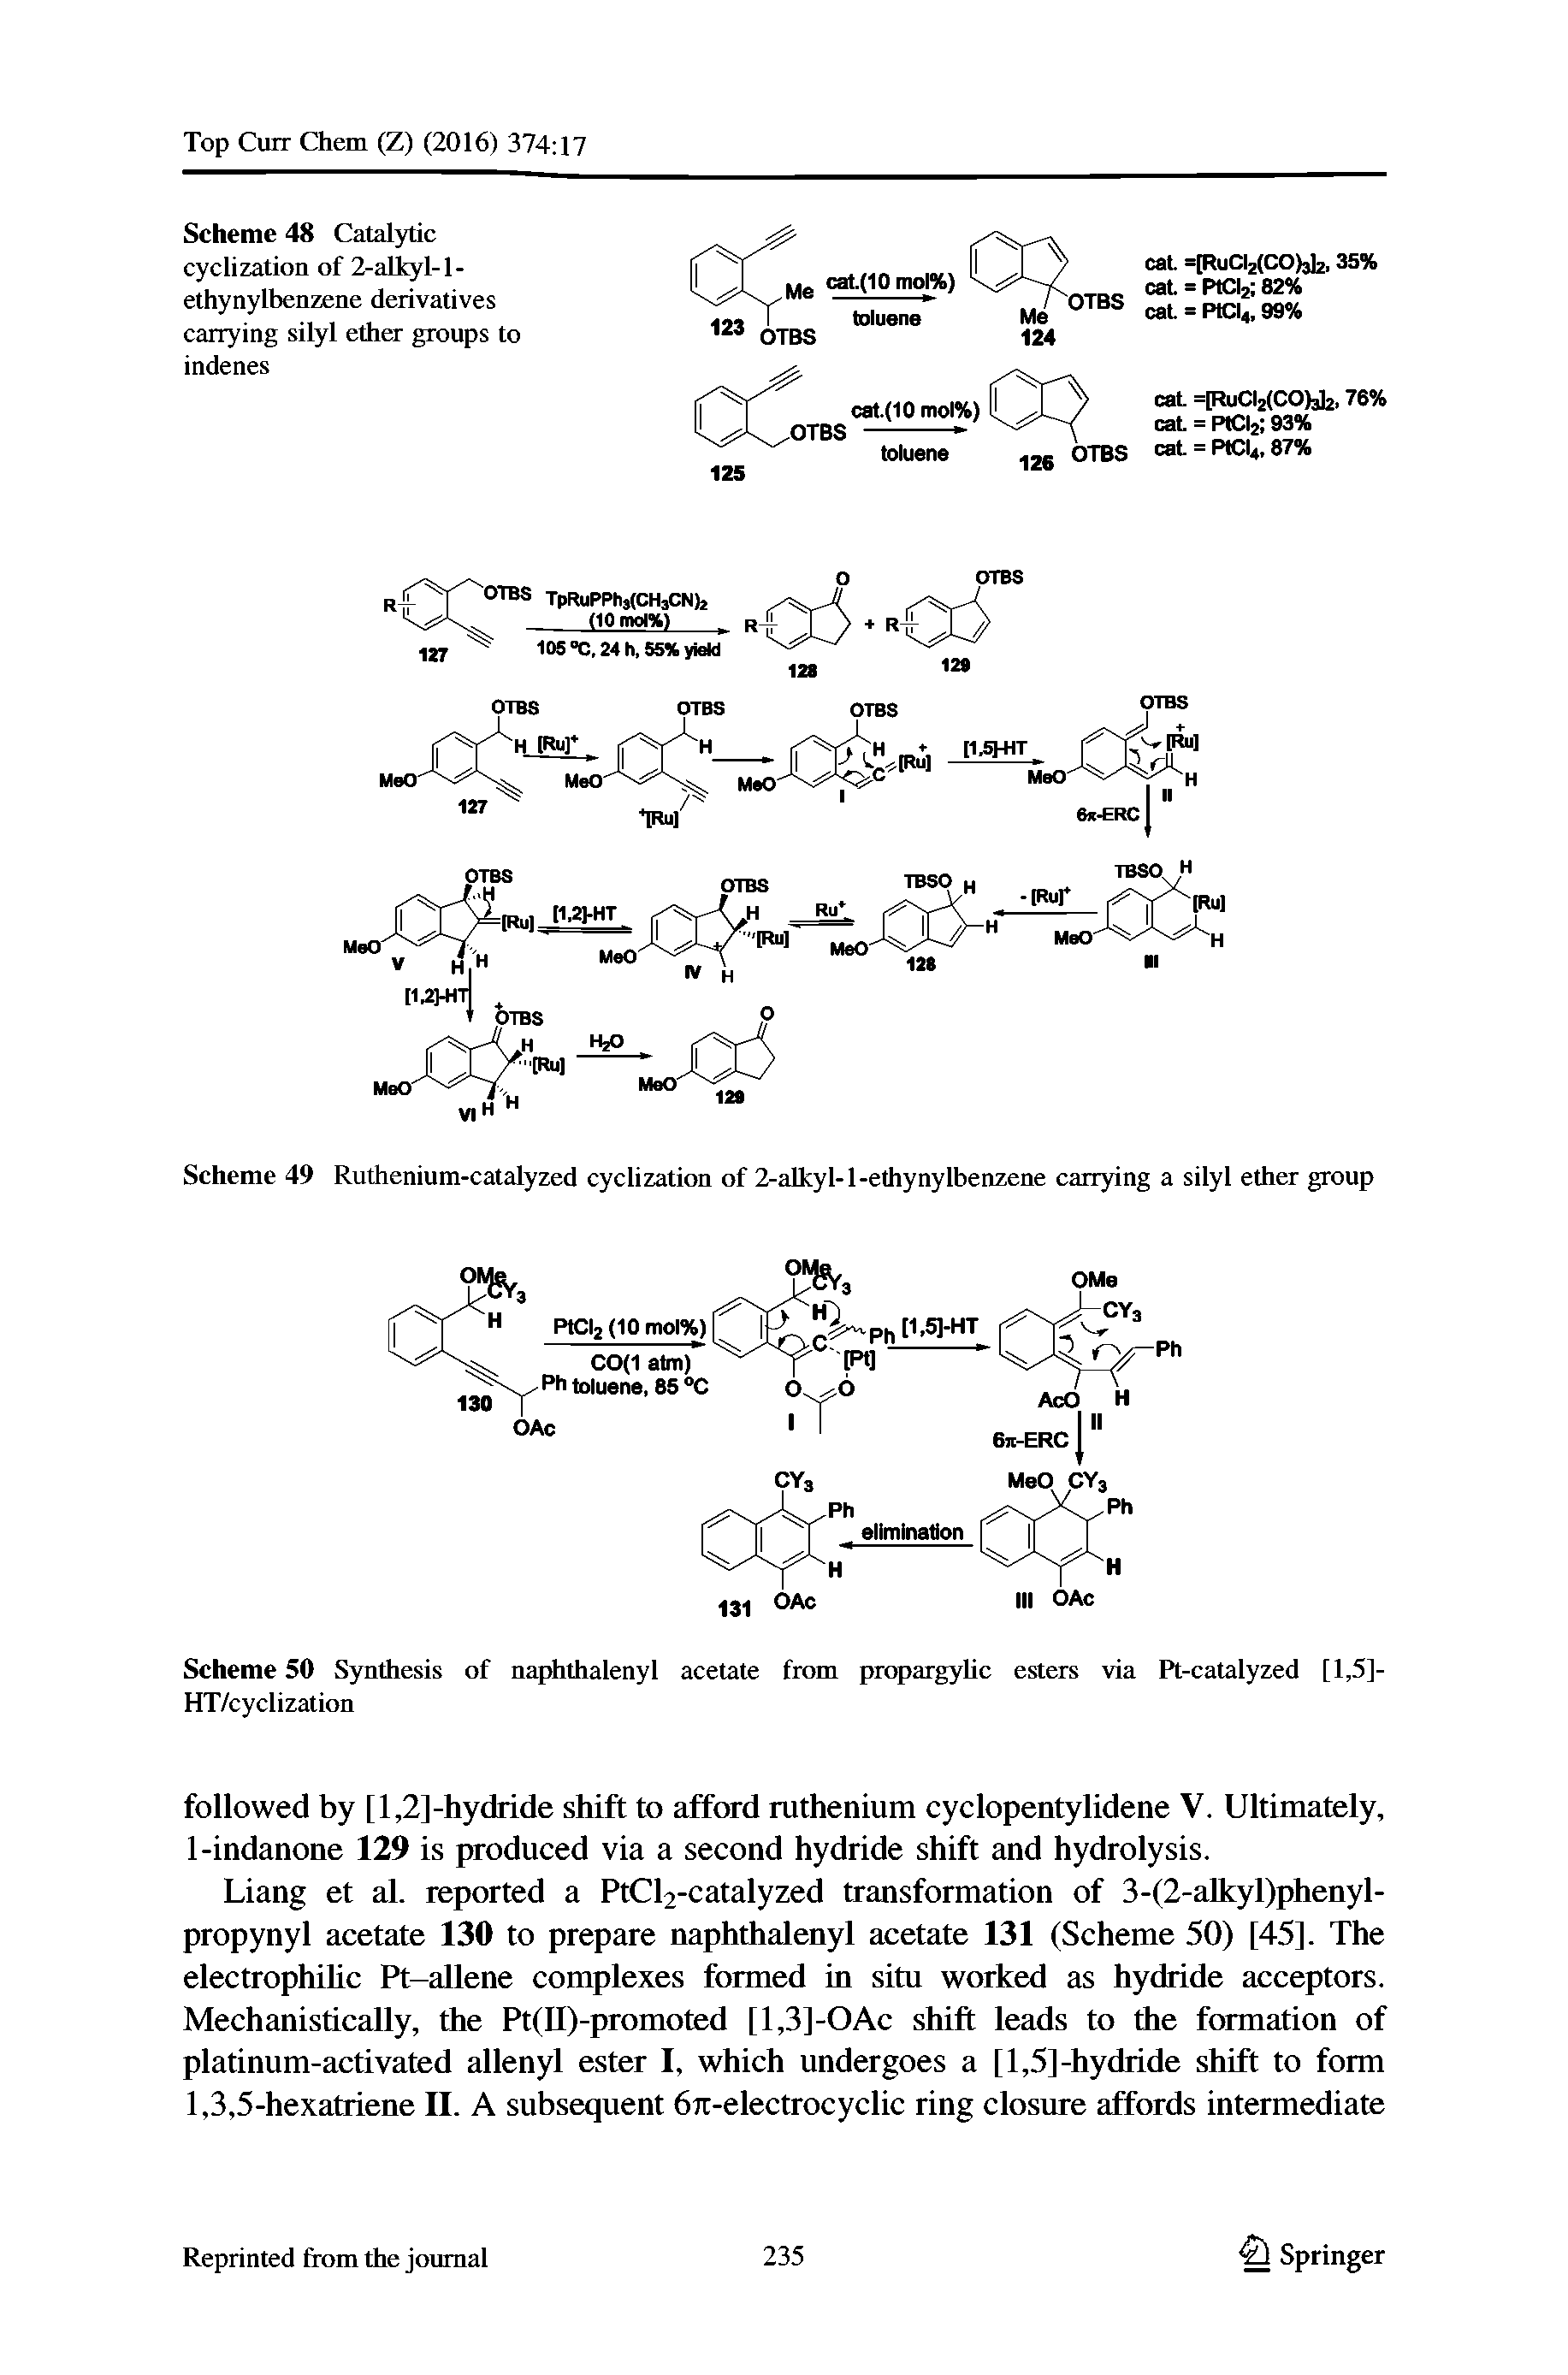 Scheme 49 Ruthenium-catalyzed cyclization of 2-allcyl-l-ethynylbenzene carrying a silyl ether group...